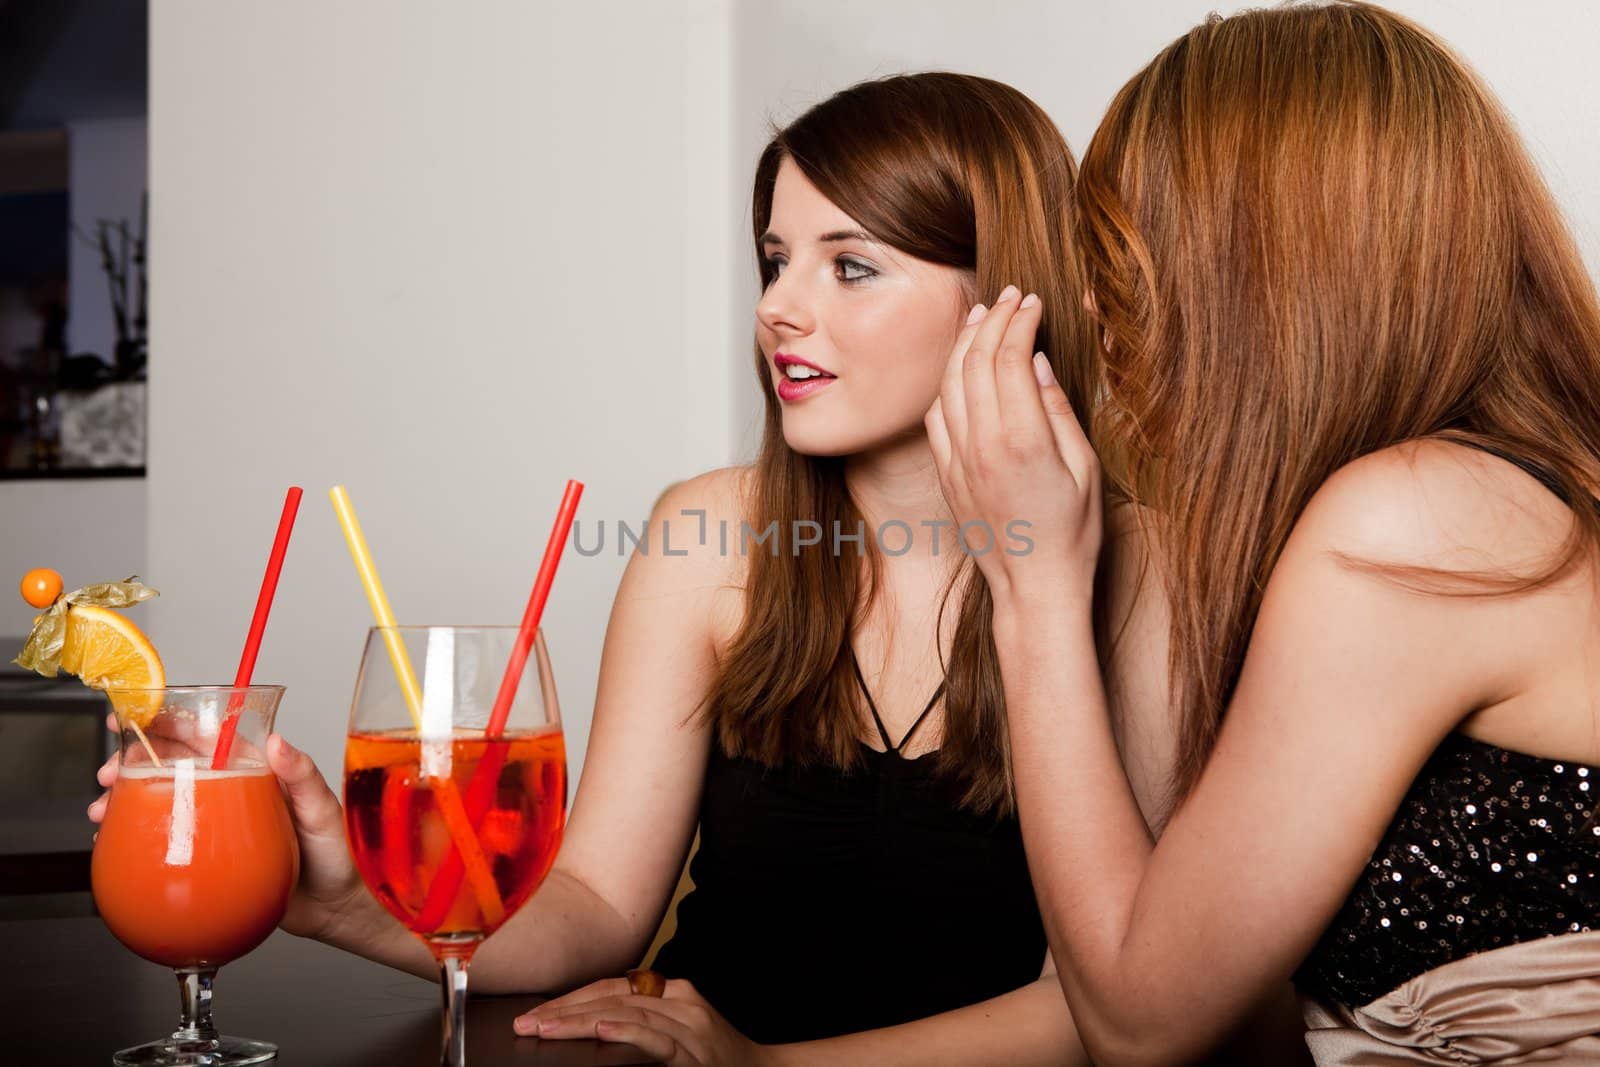 Young girls talking gossips at the bar/restaurant/nightclub